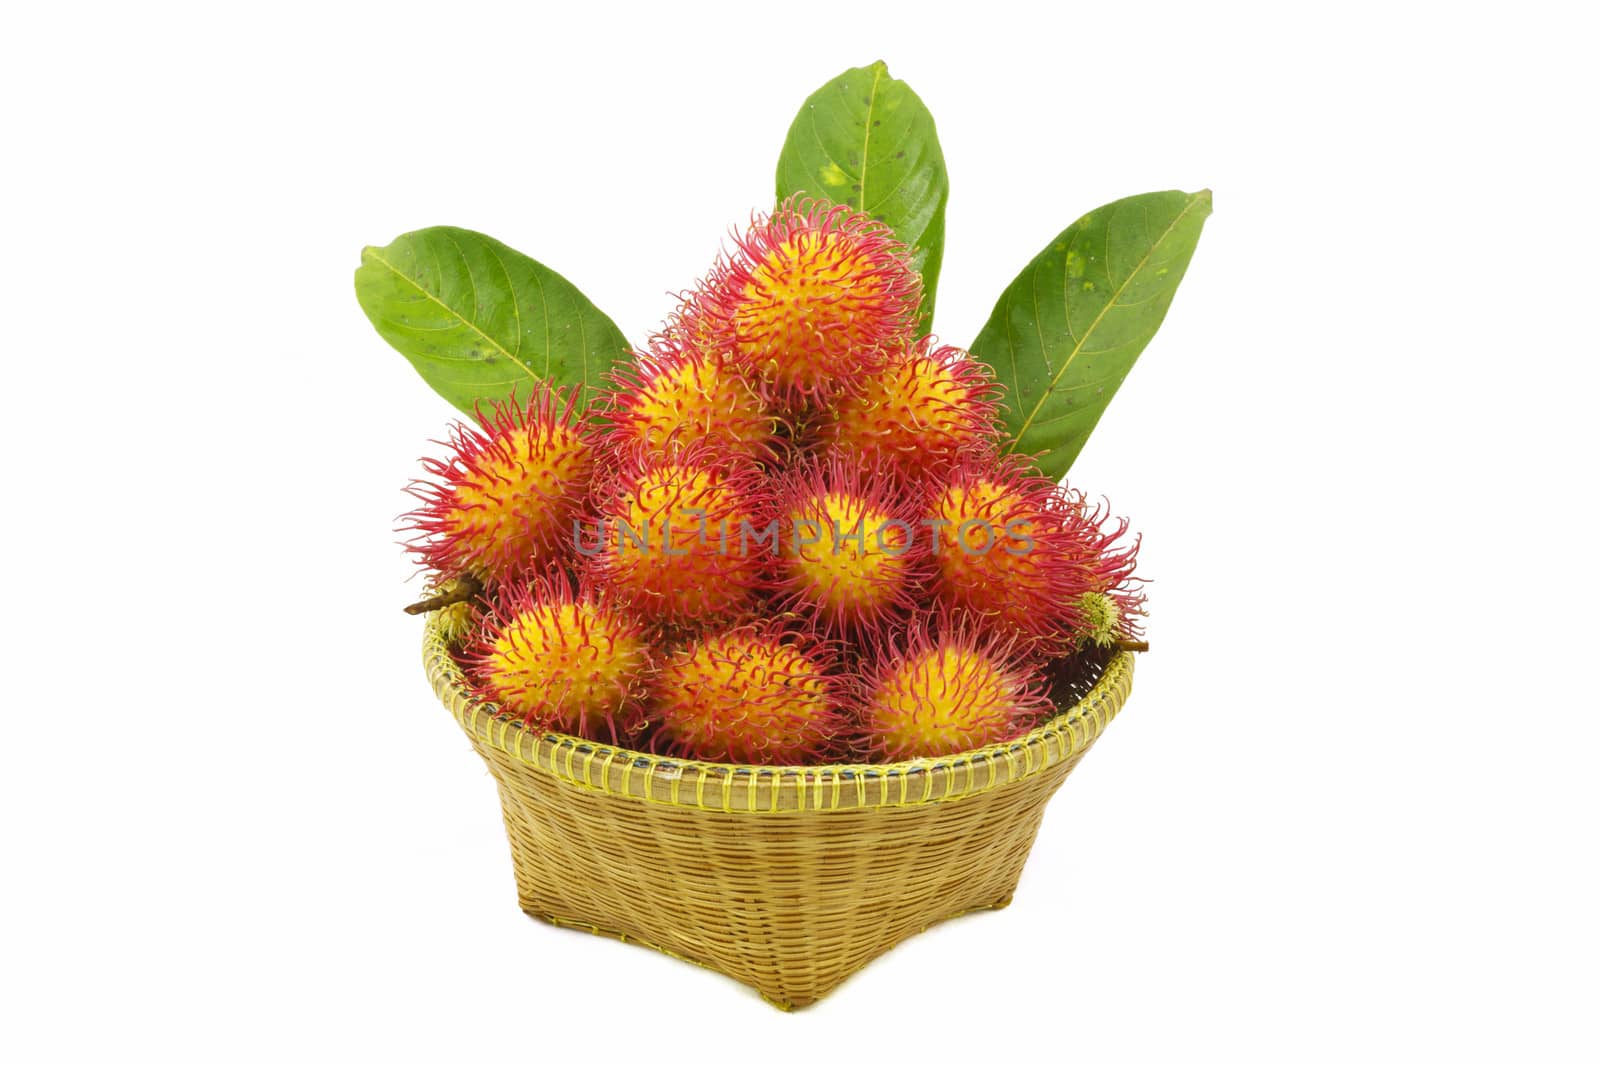 Rambutan Thai fruit in wicker basket isolated. by ngungfoto